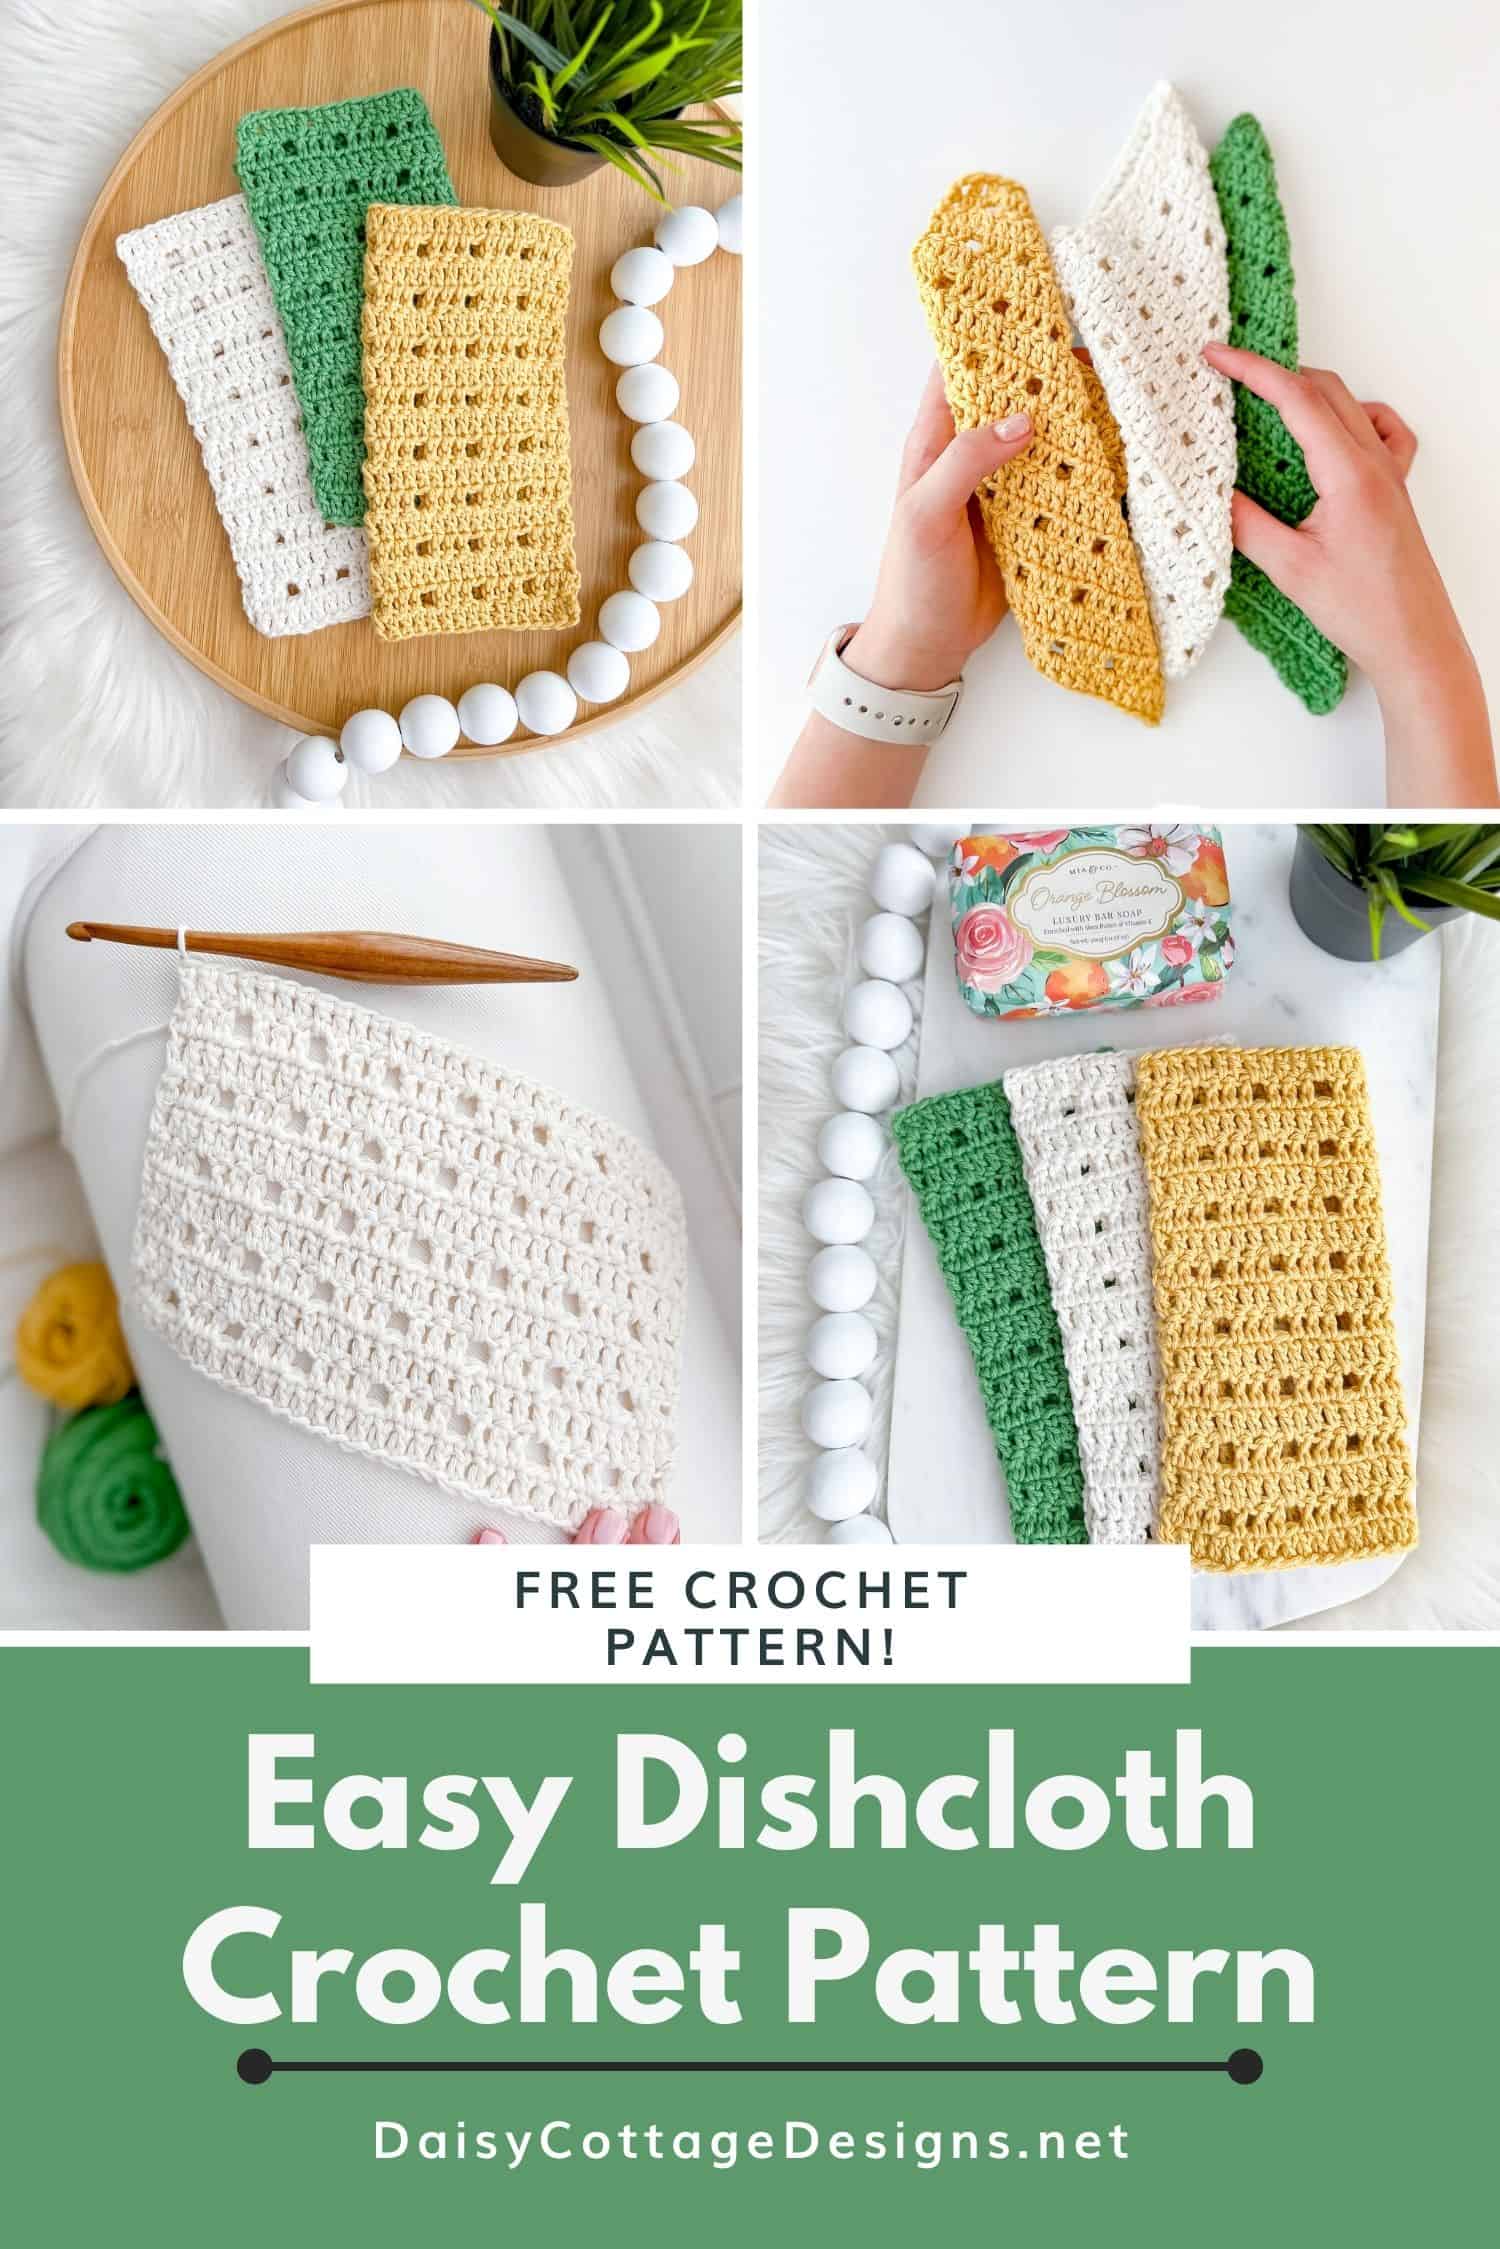 https://daisycottagedesigns.net/wp-content/uploads/2022/06/Easy-Dishcloth-Crochet-Pattern.jpg